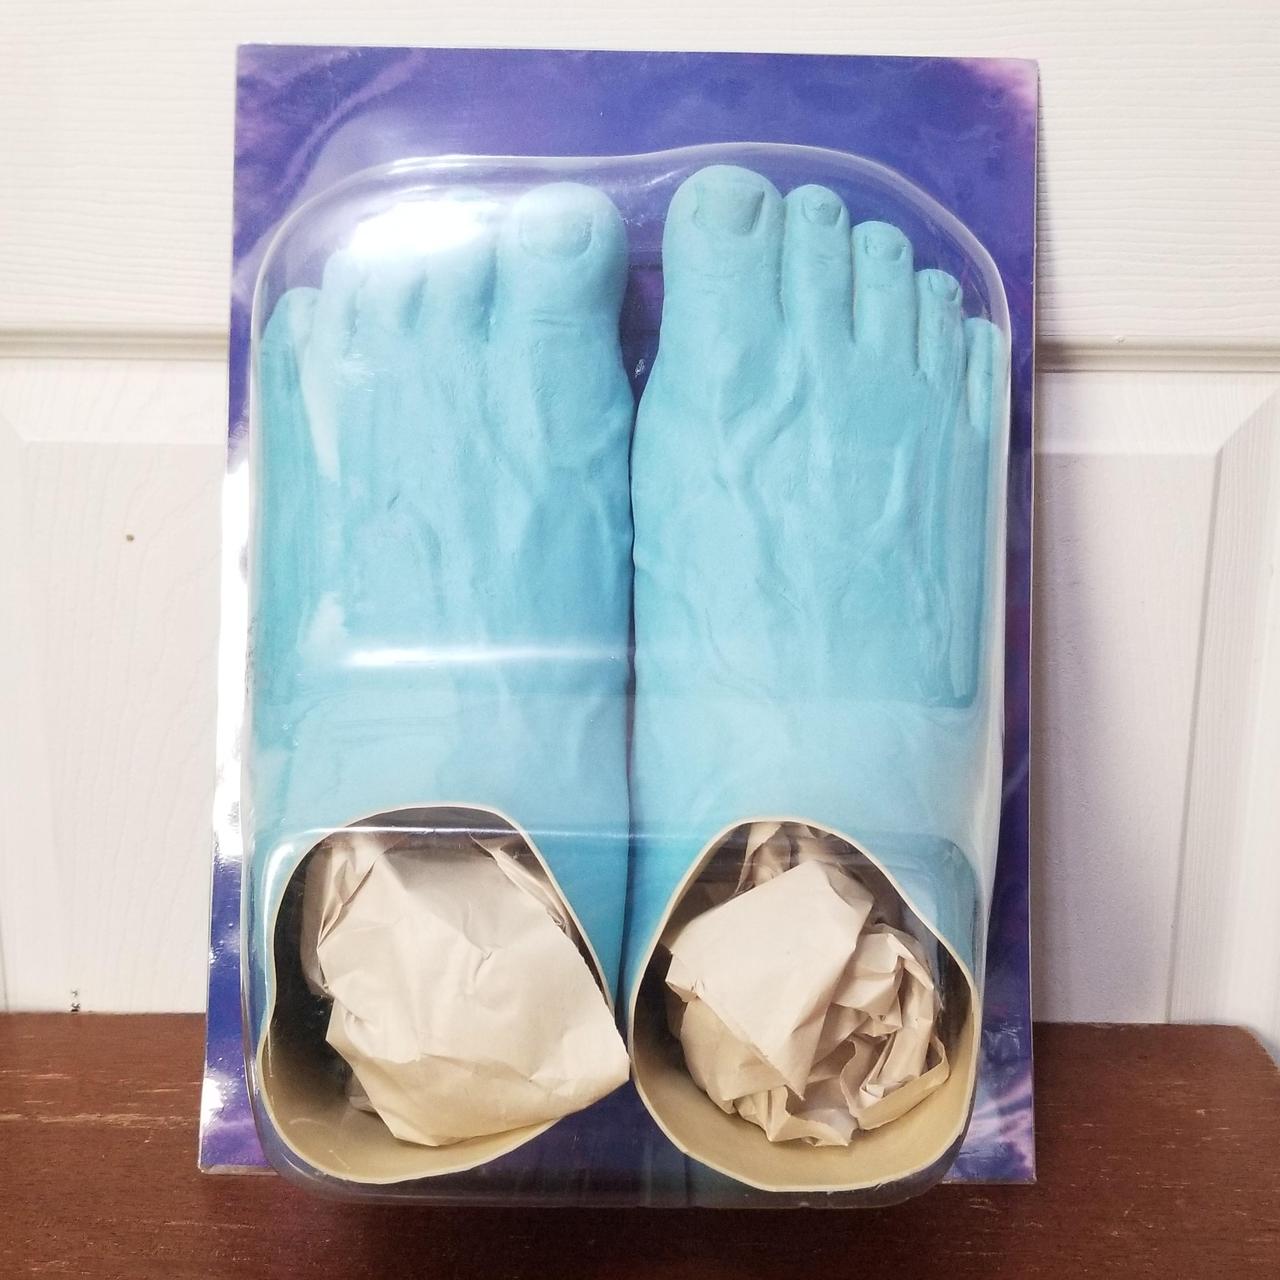 imran potato gloves